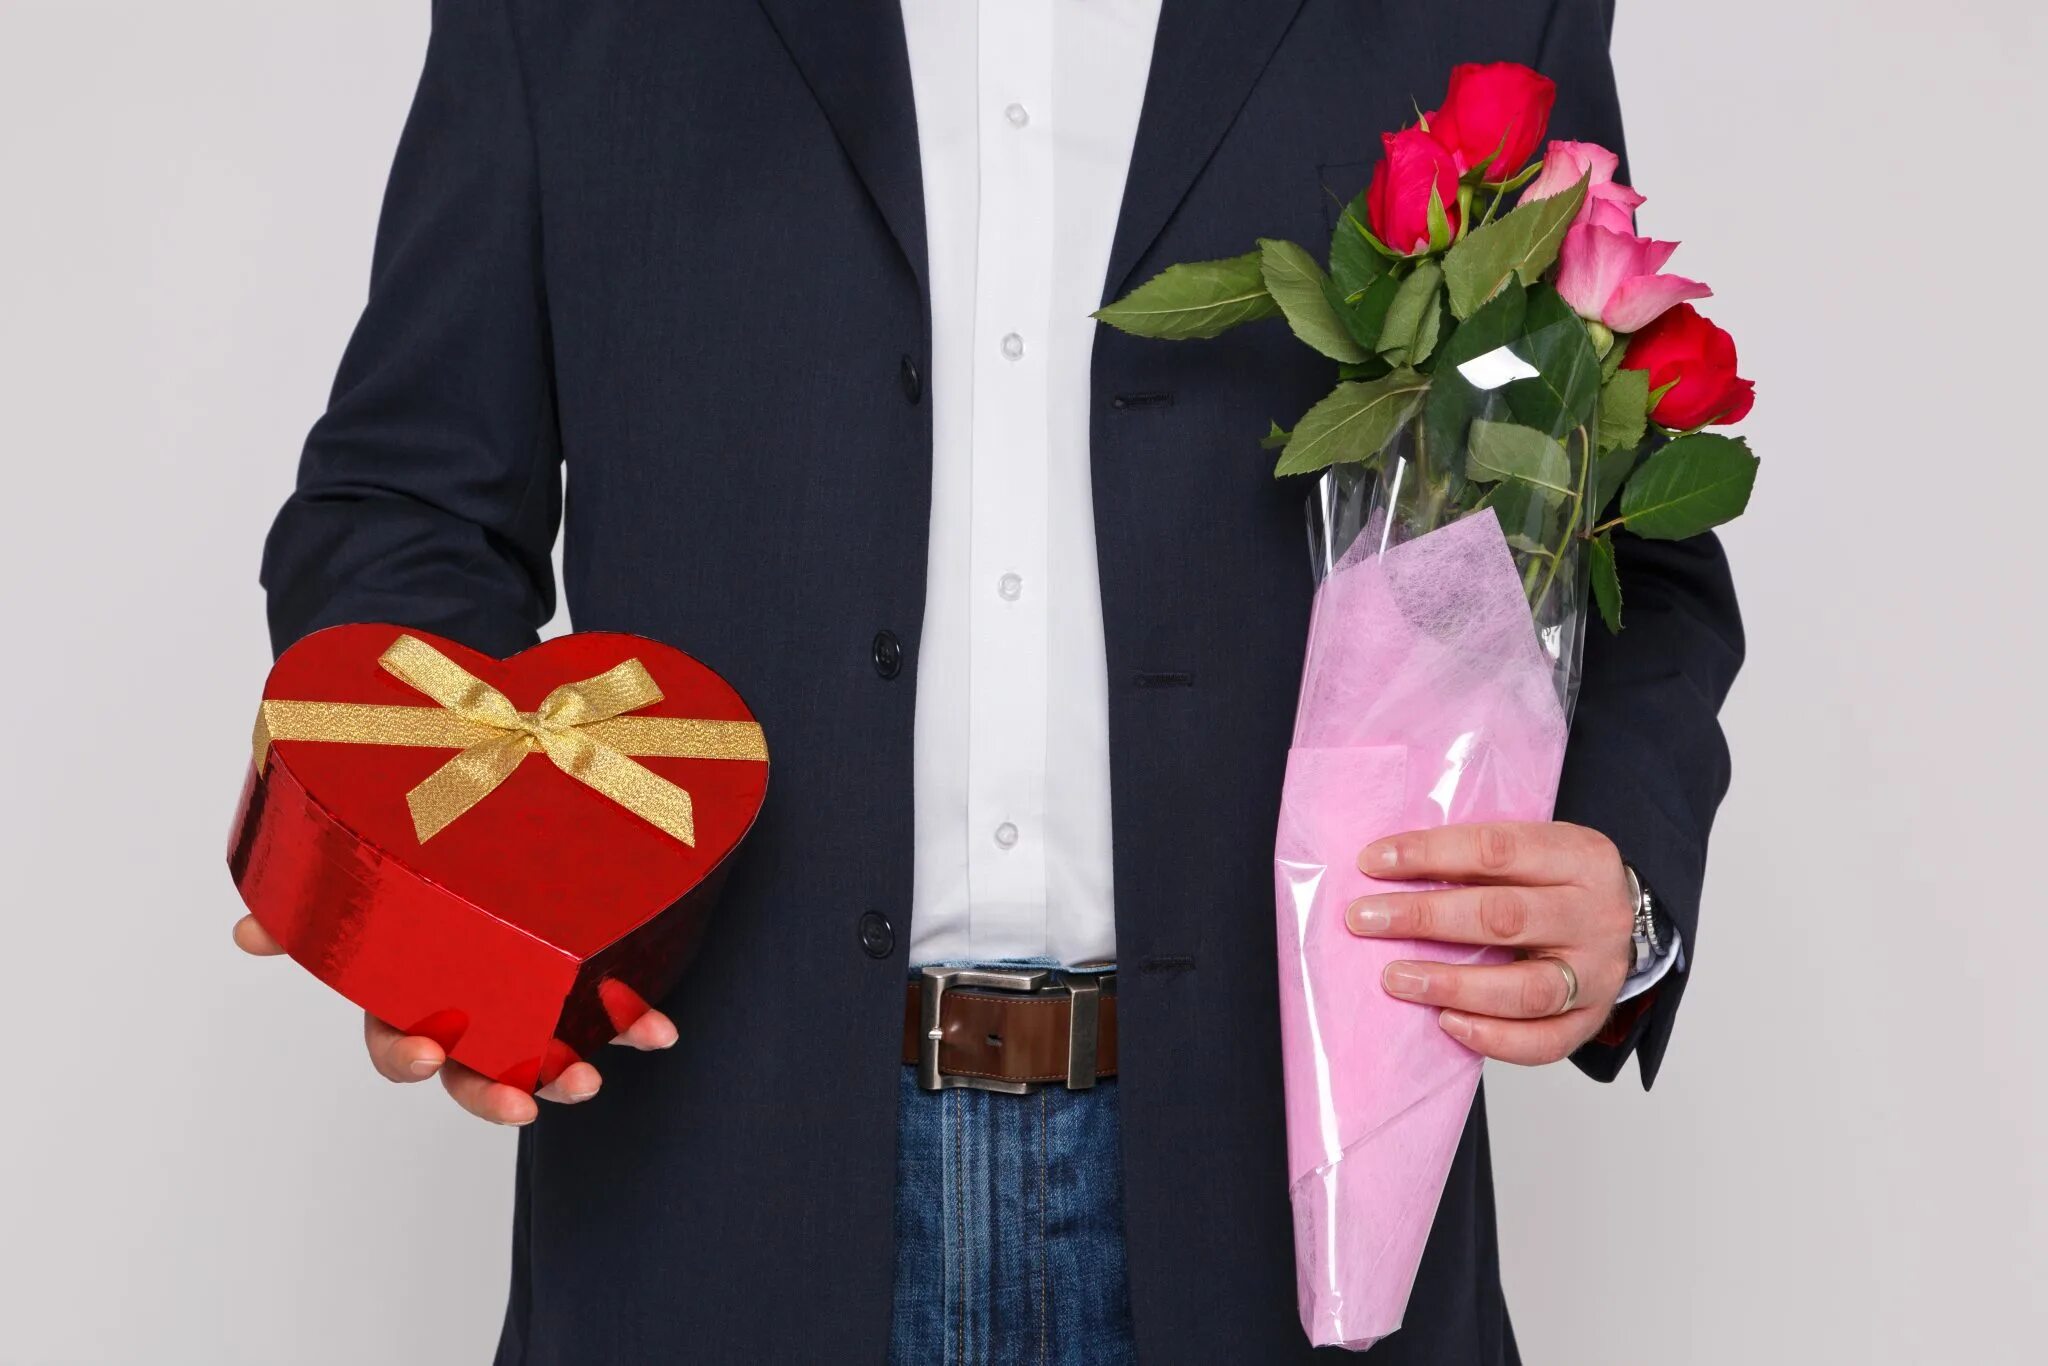 Мужчина с цветами в руках. Мужчина с цветами и подарками. Парень дарит девушке цветы и конфеты. Мужчина с цветами и конфетами. Дарят ли один цветок